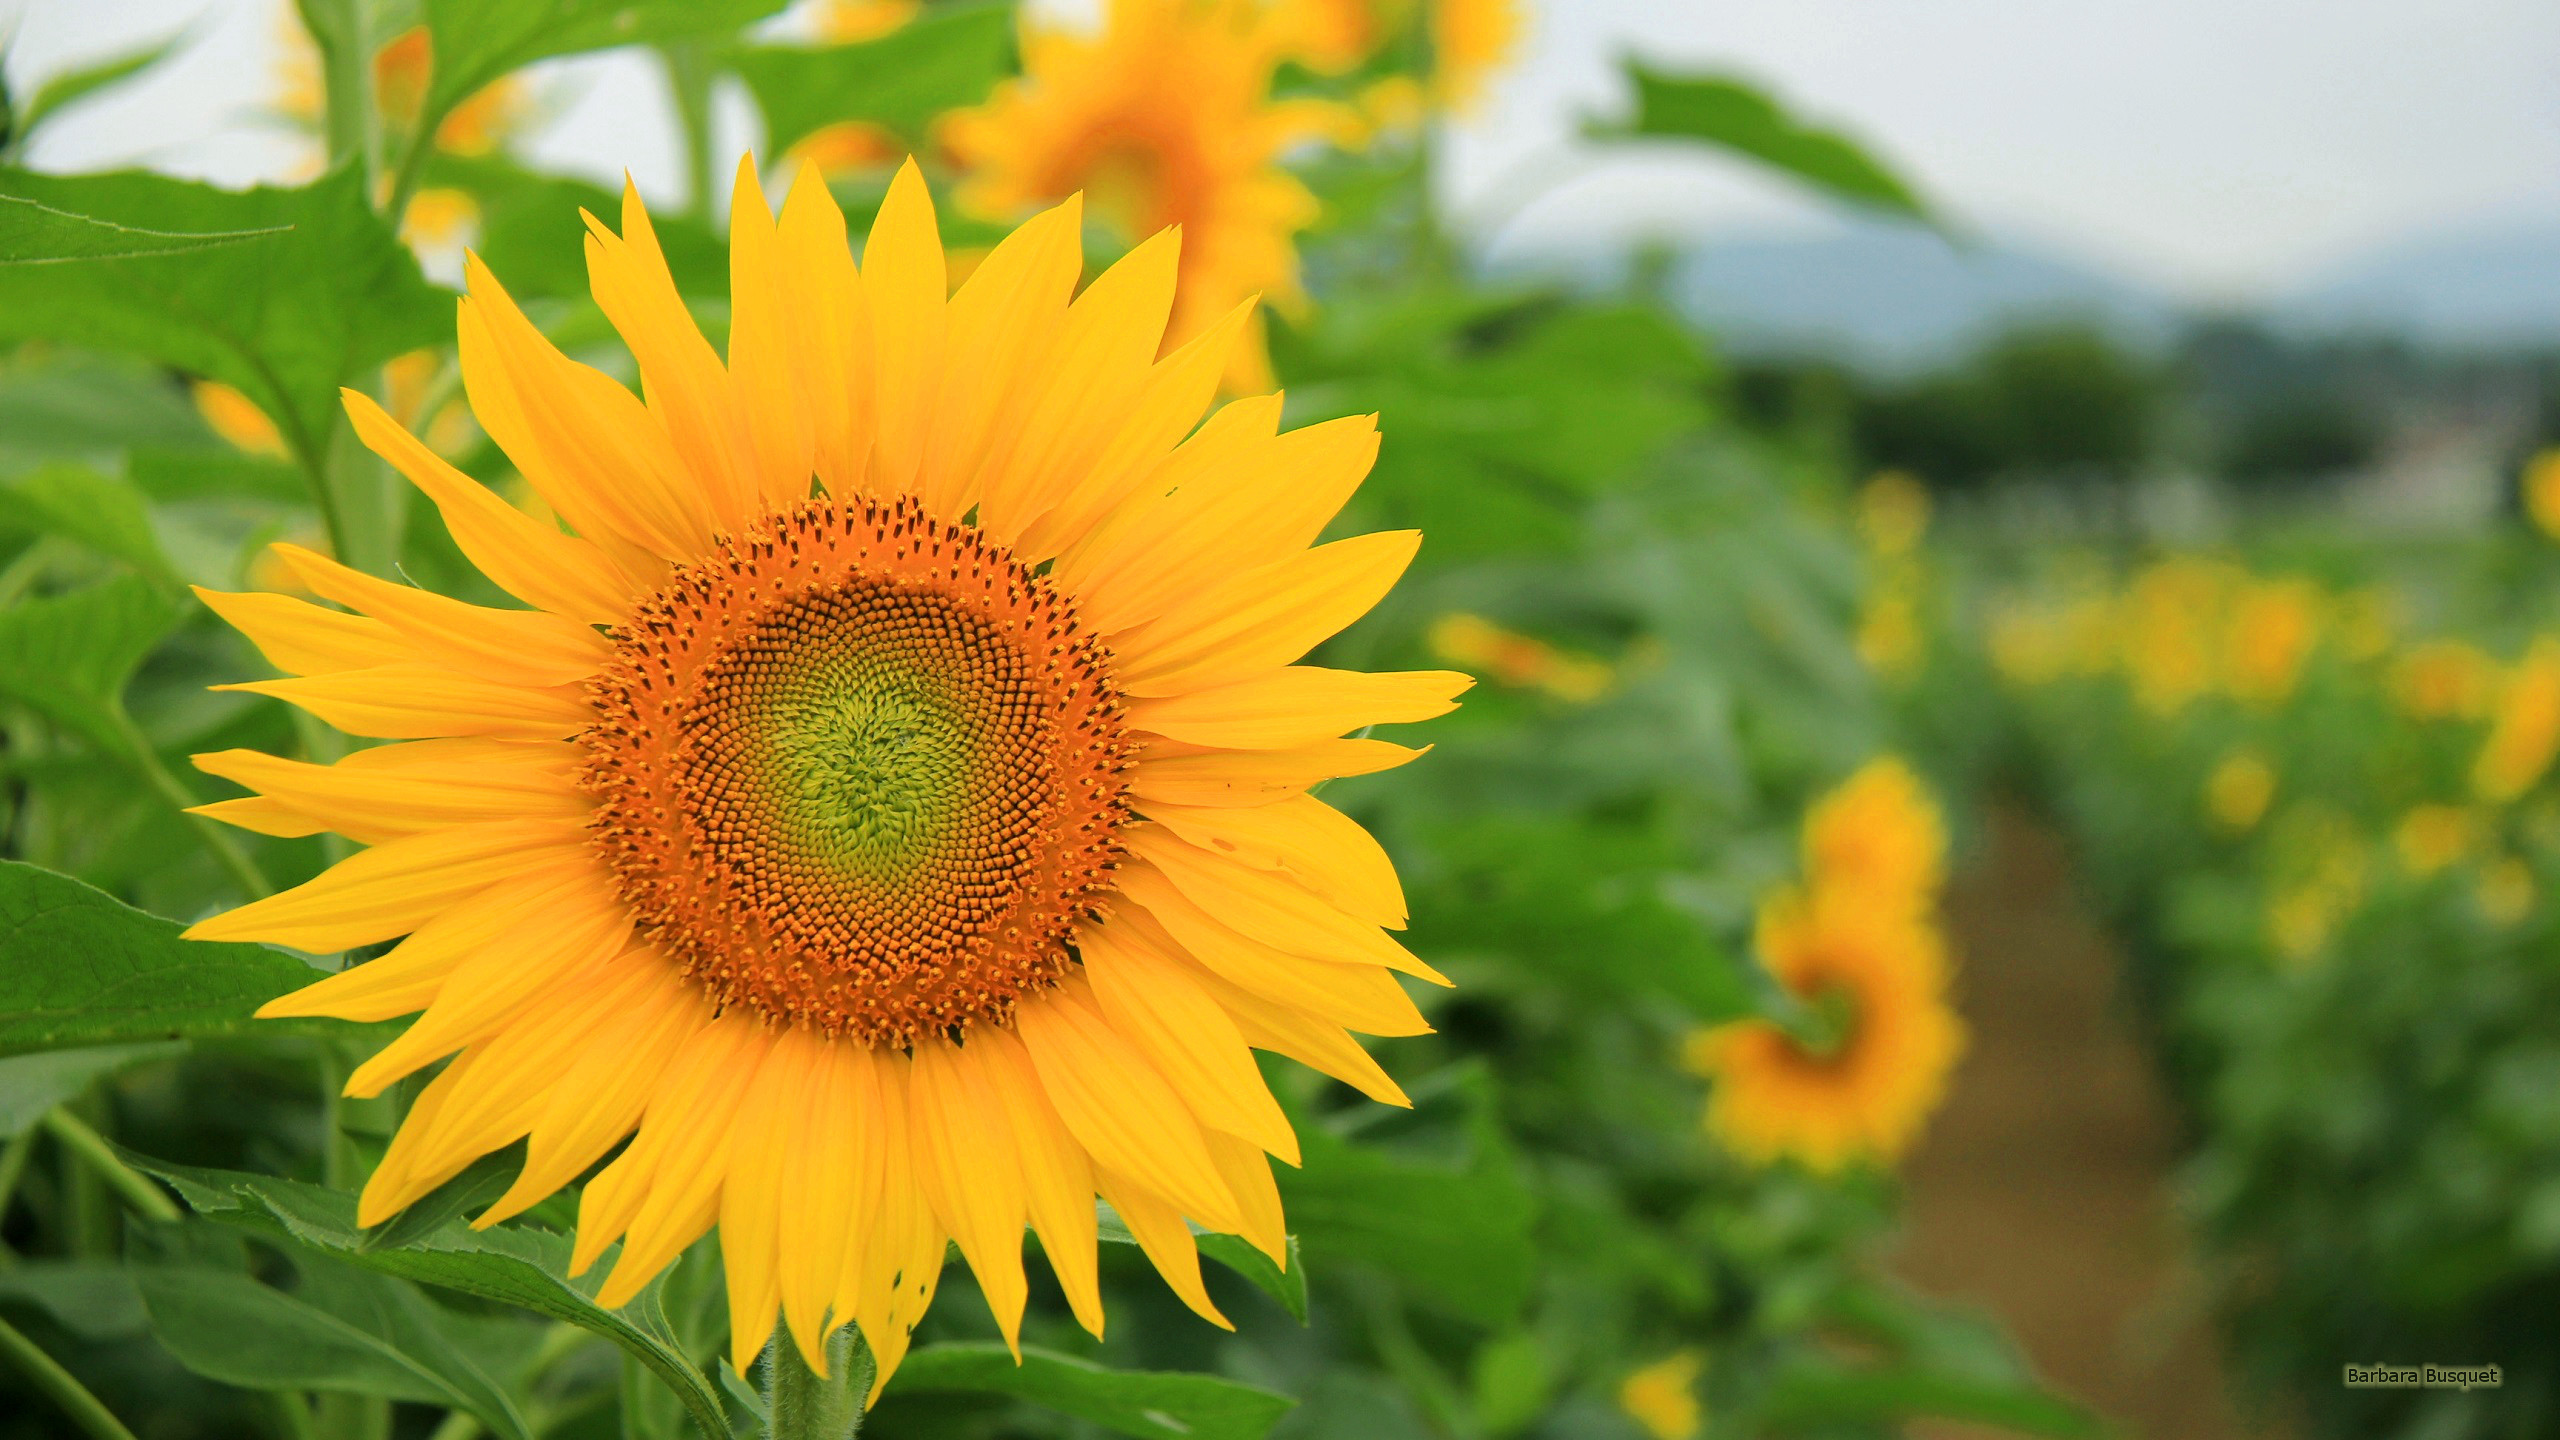 2560x1440 HD wallpaper with sunflower in a sunflower field.